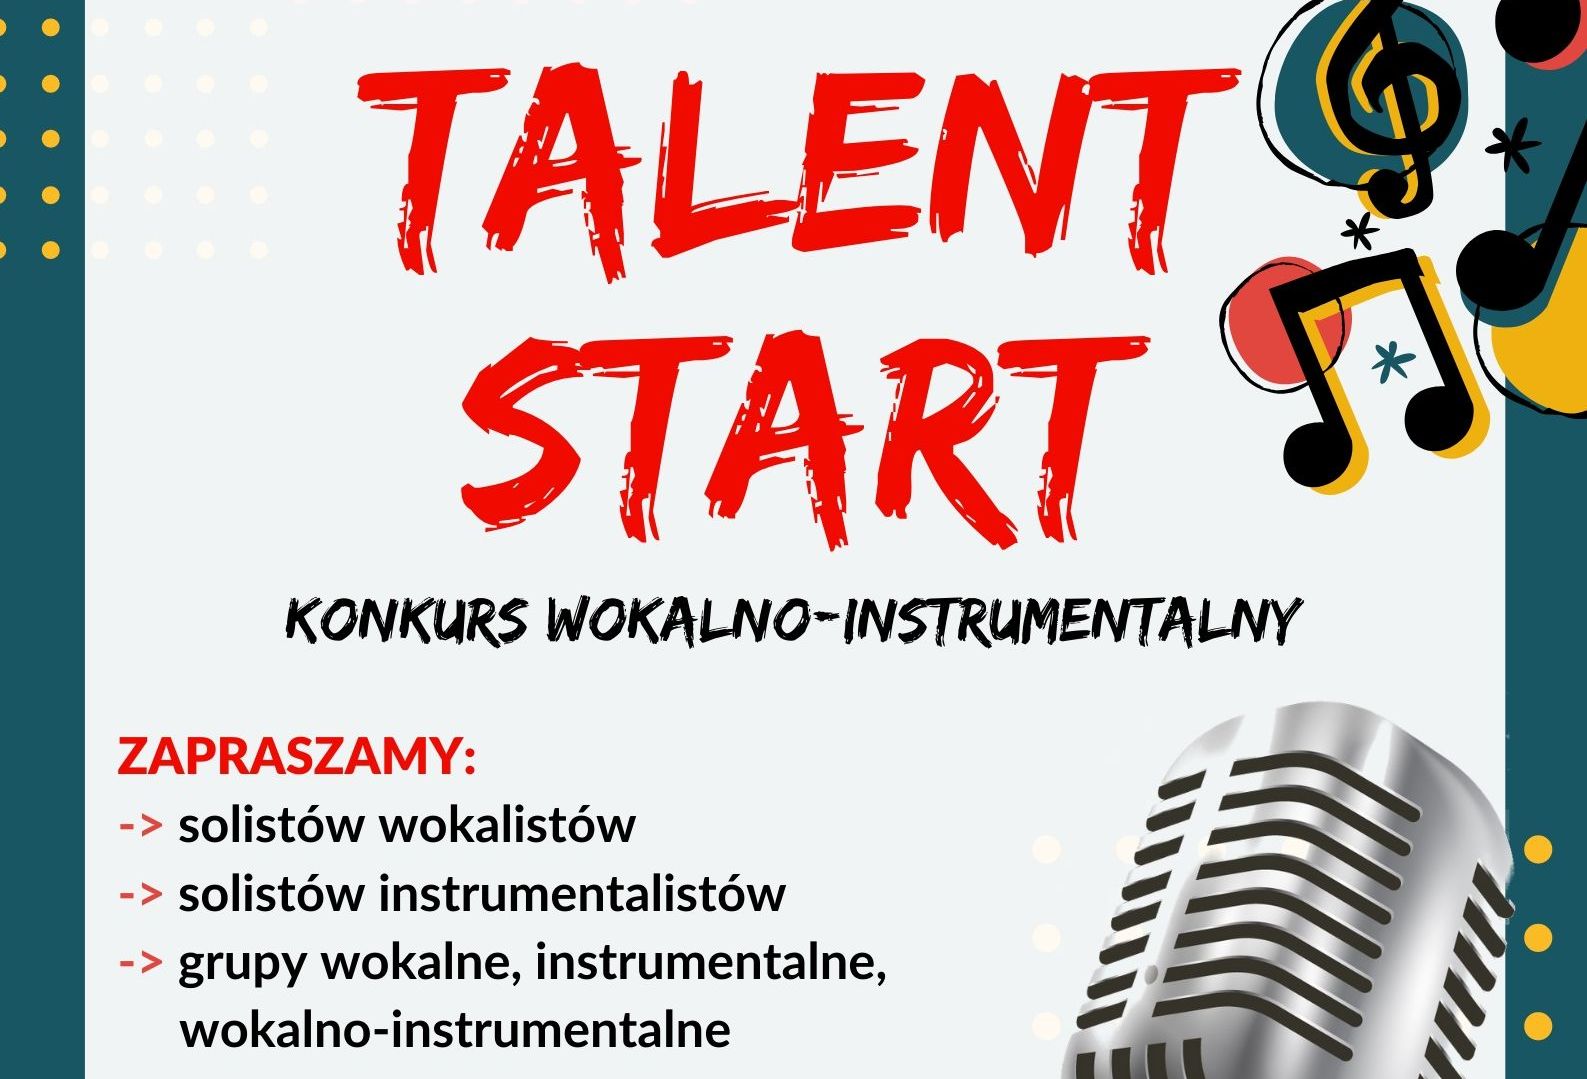 Konkurs wokalno-instrumentalny Talent Start